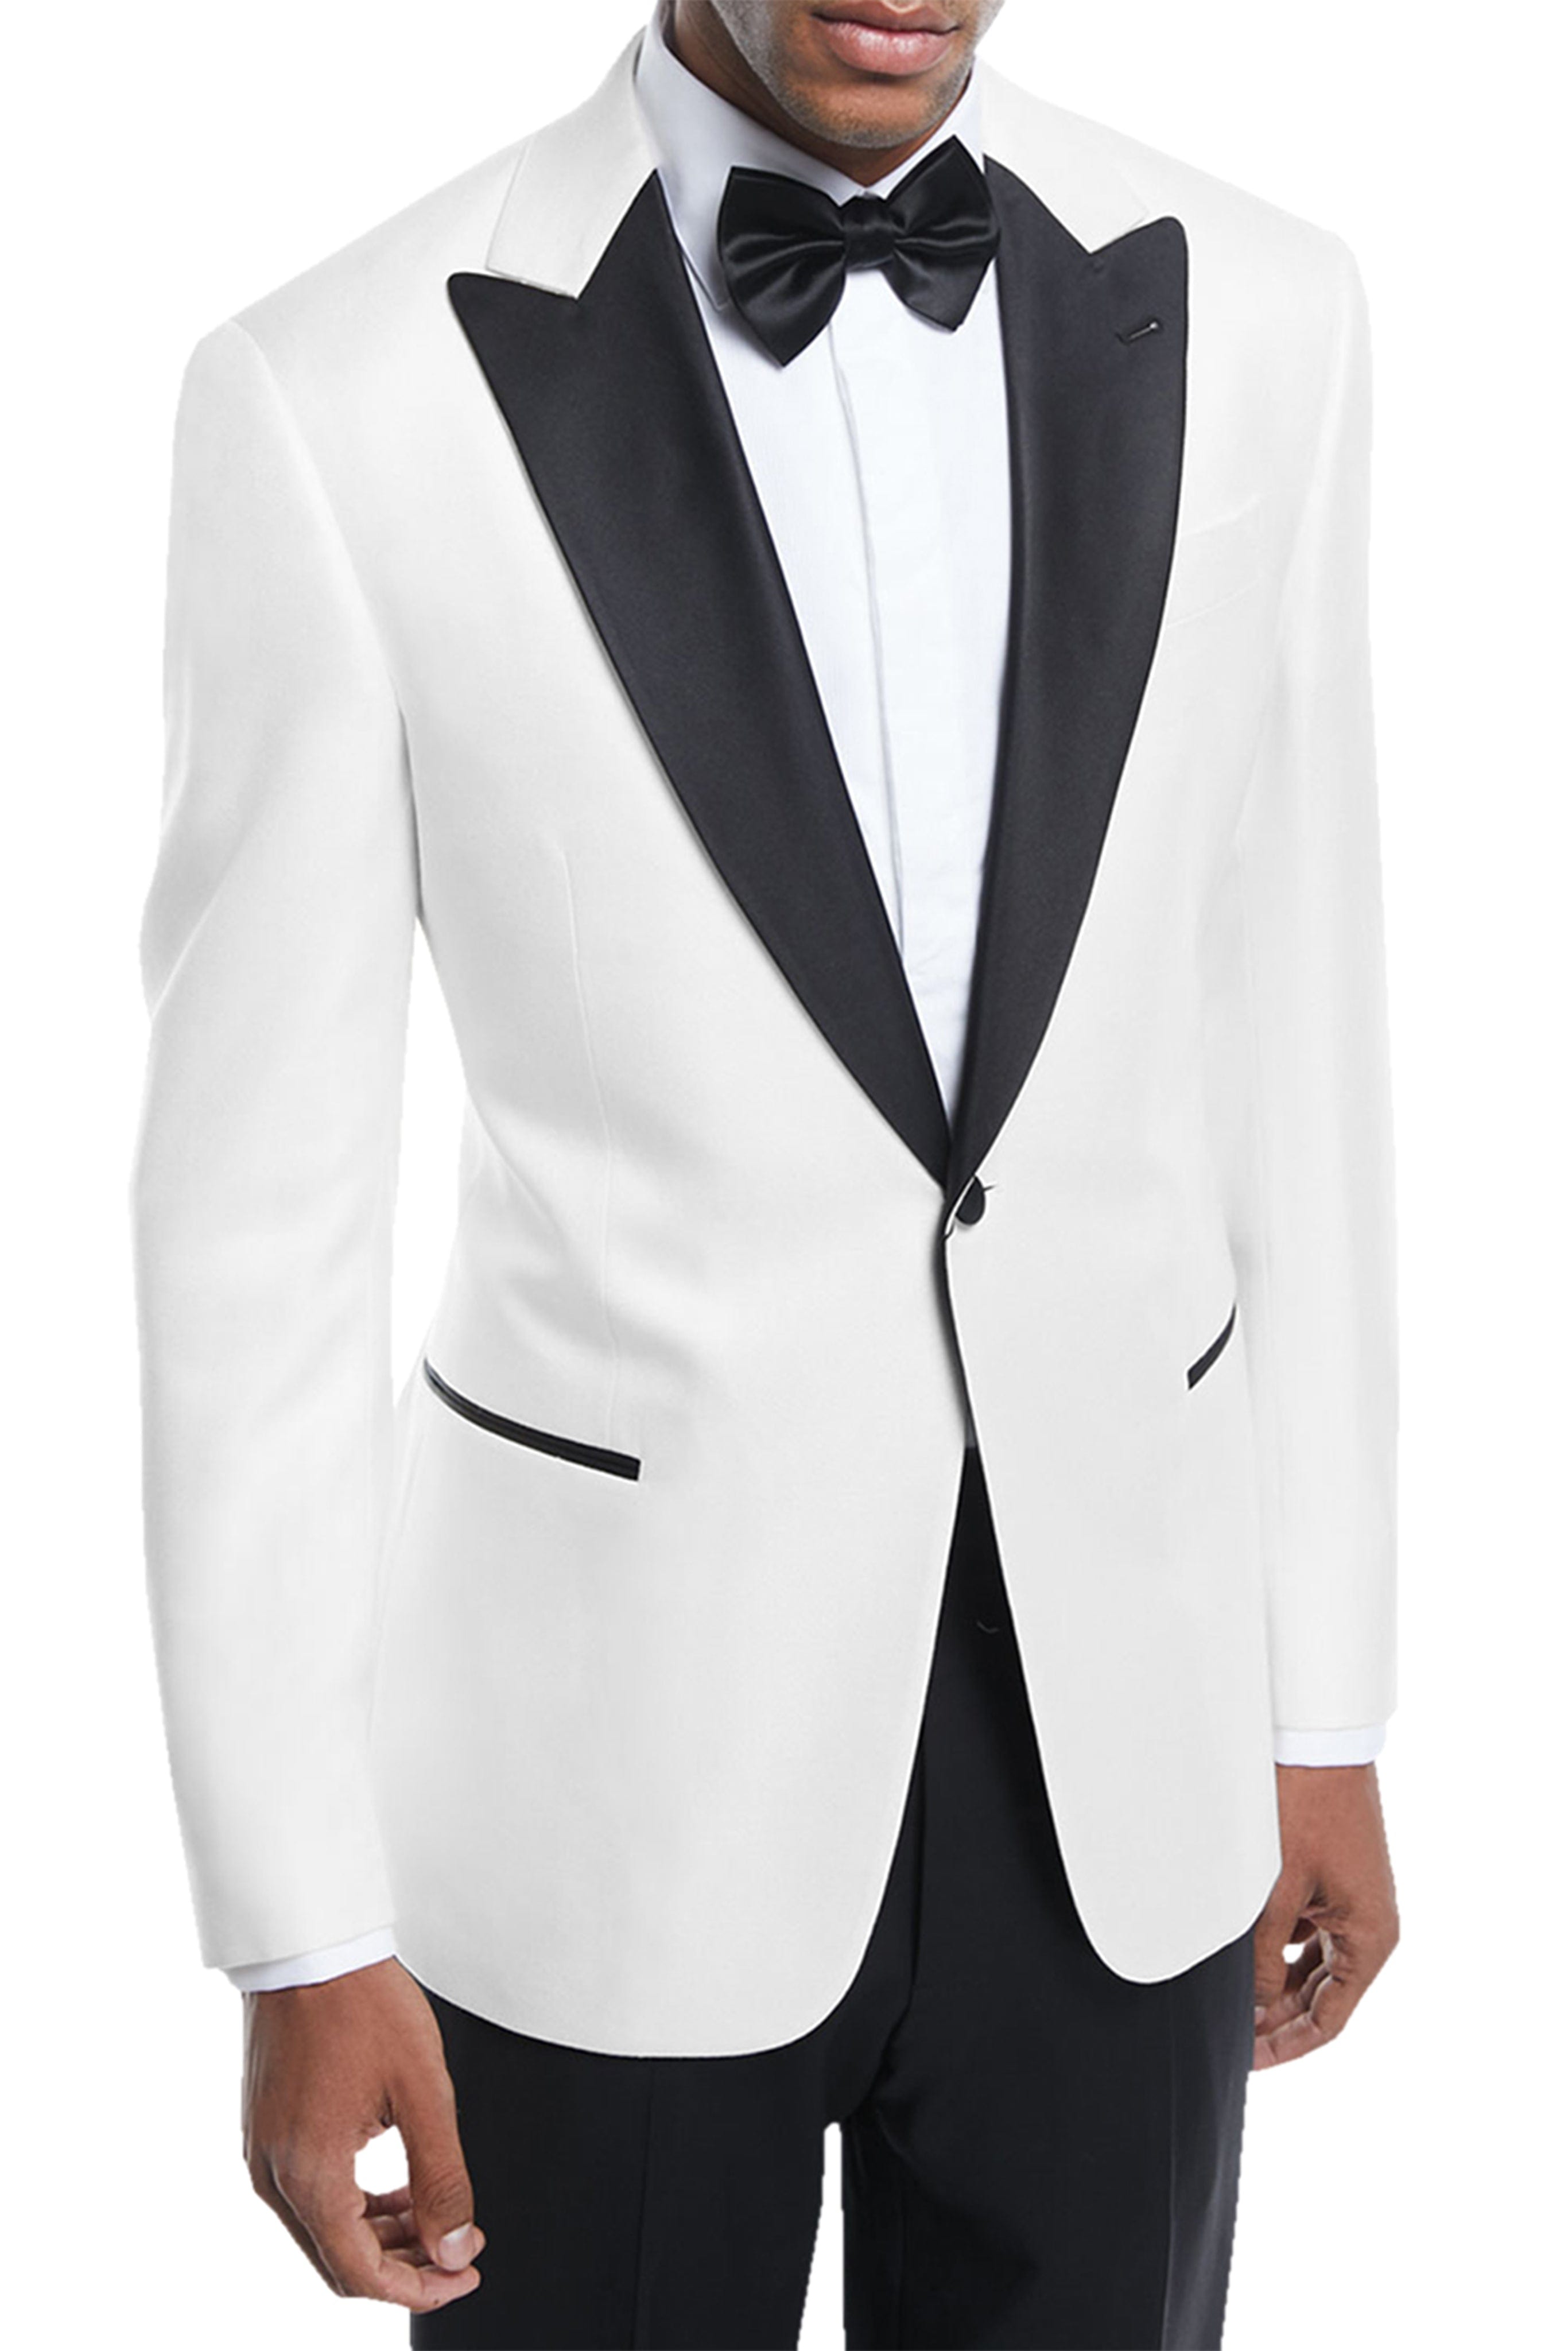 aesido Men's Suit 2 Piece Business Peak Lapel Blazer For Wedding